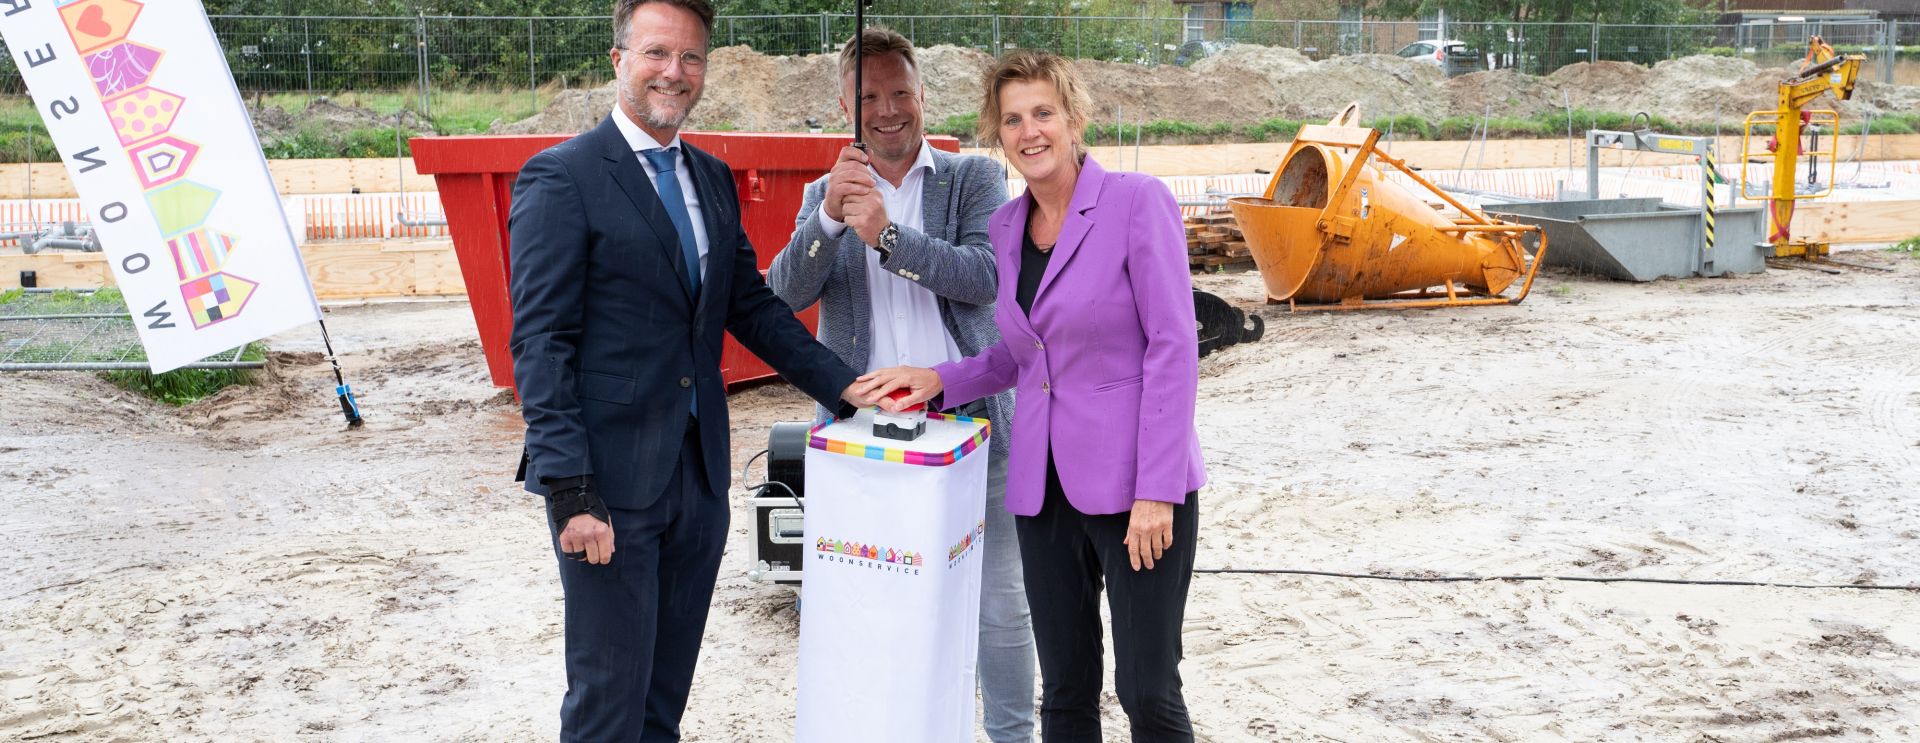 Woonservice start met bouw appartementencomplex Larikshof in Assen